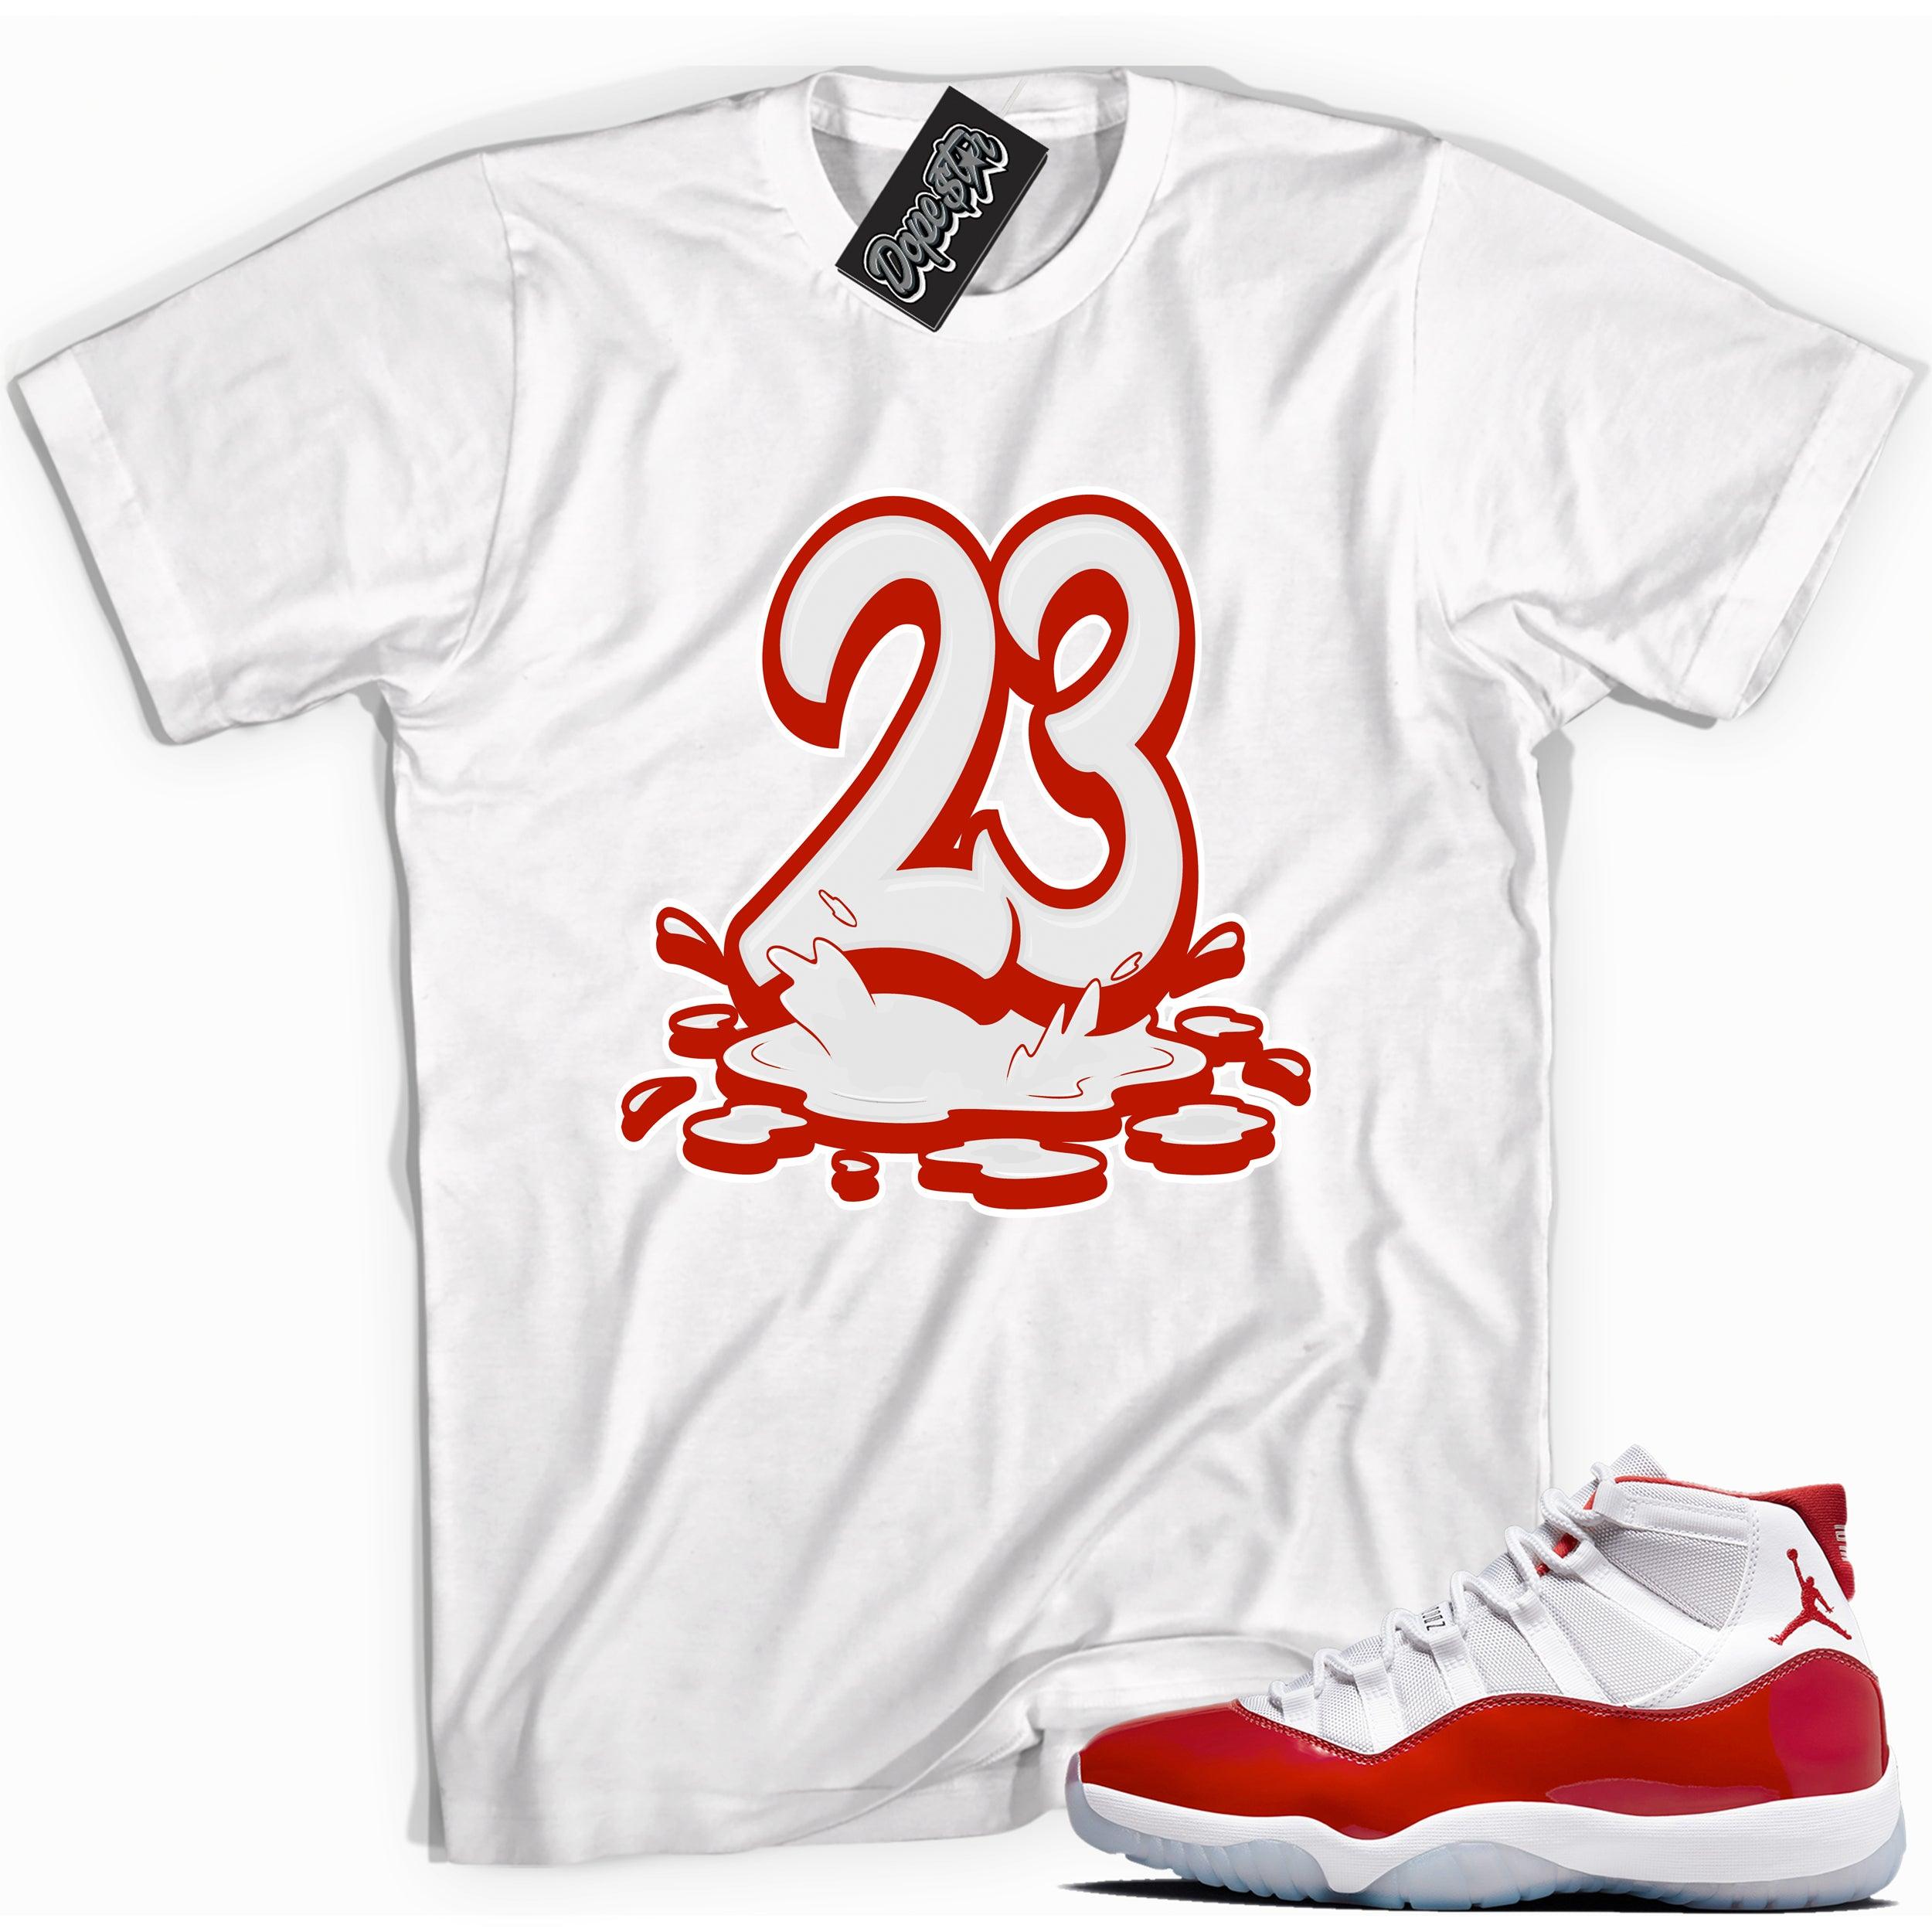 Number 23 Melting Shirt Air Jordan 11 Cherry photo